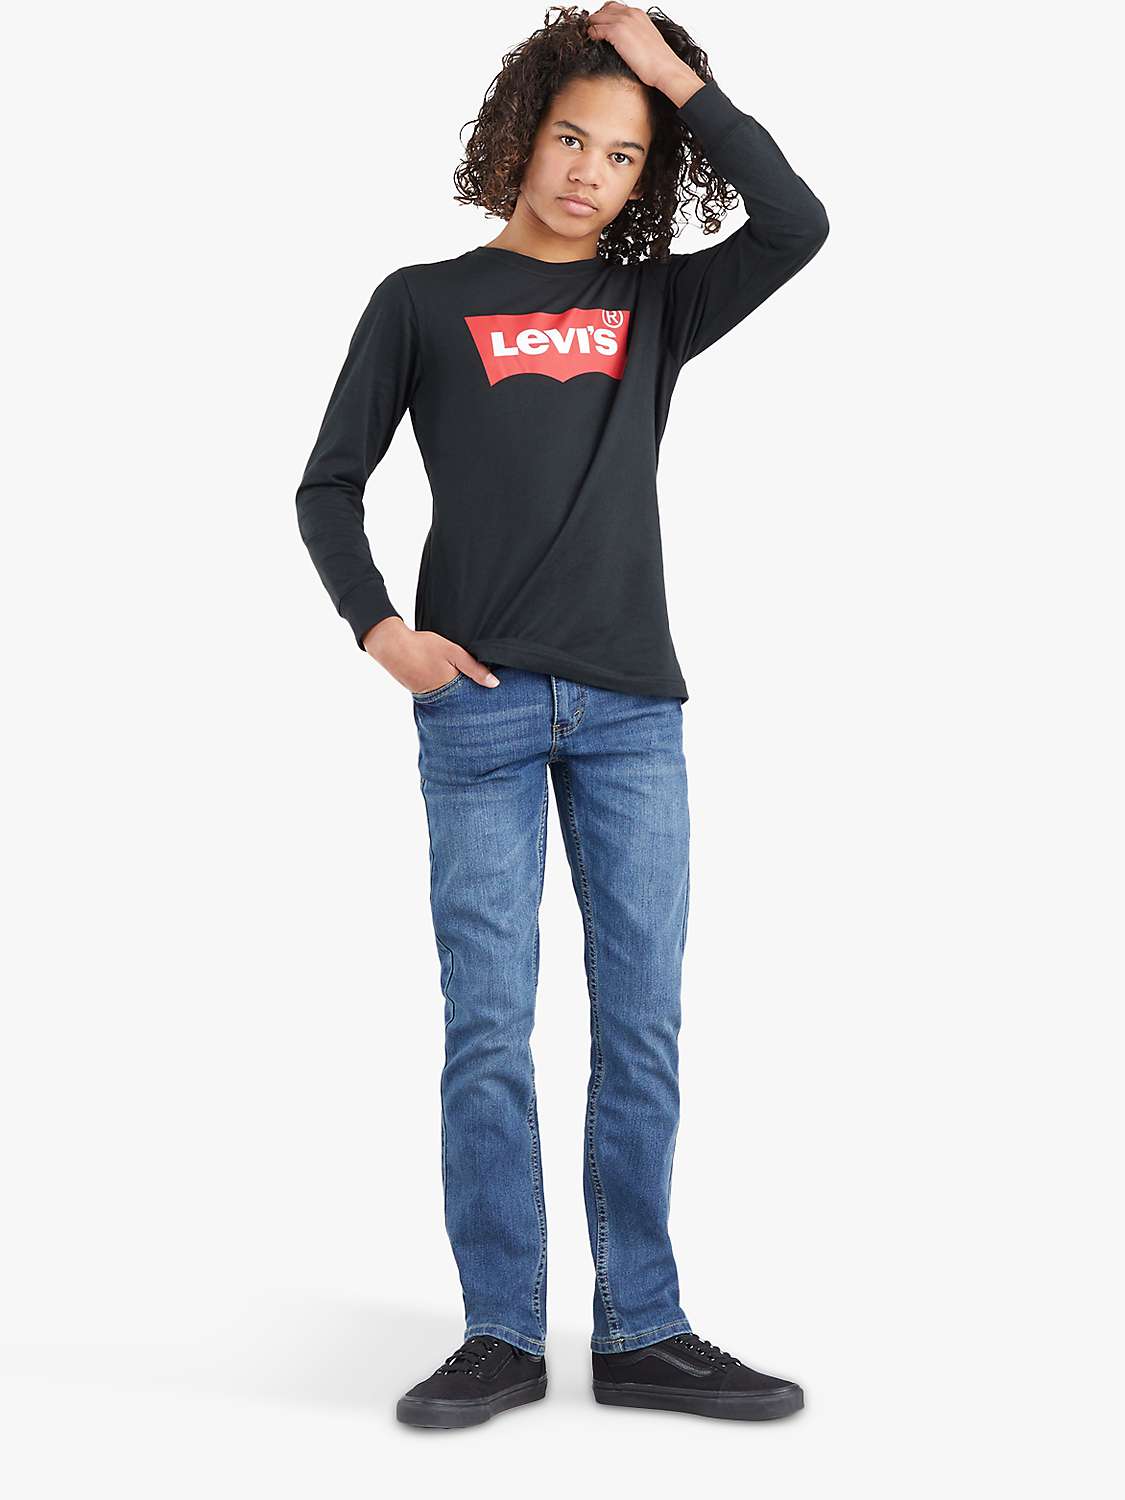 Buy Levi Boys' 511 Slim Fit Jeans Online at johnlewis.com